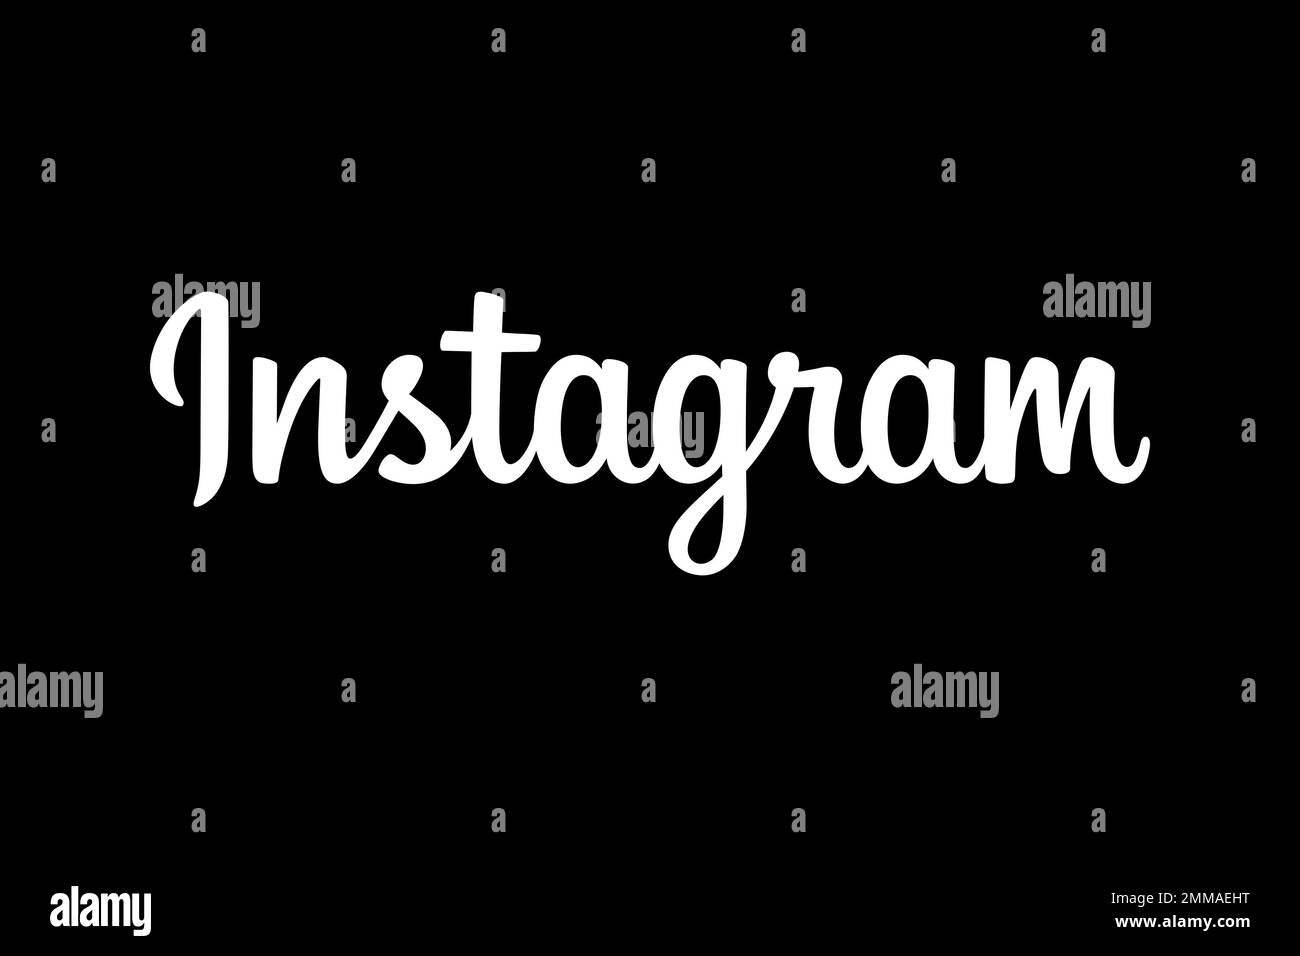 Instagram Wordmark White, black background, logo, brand name Stock Photo